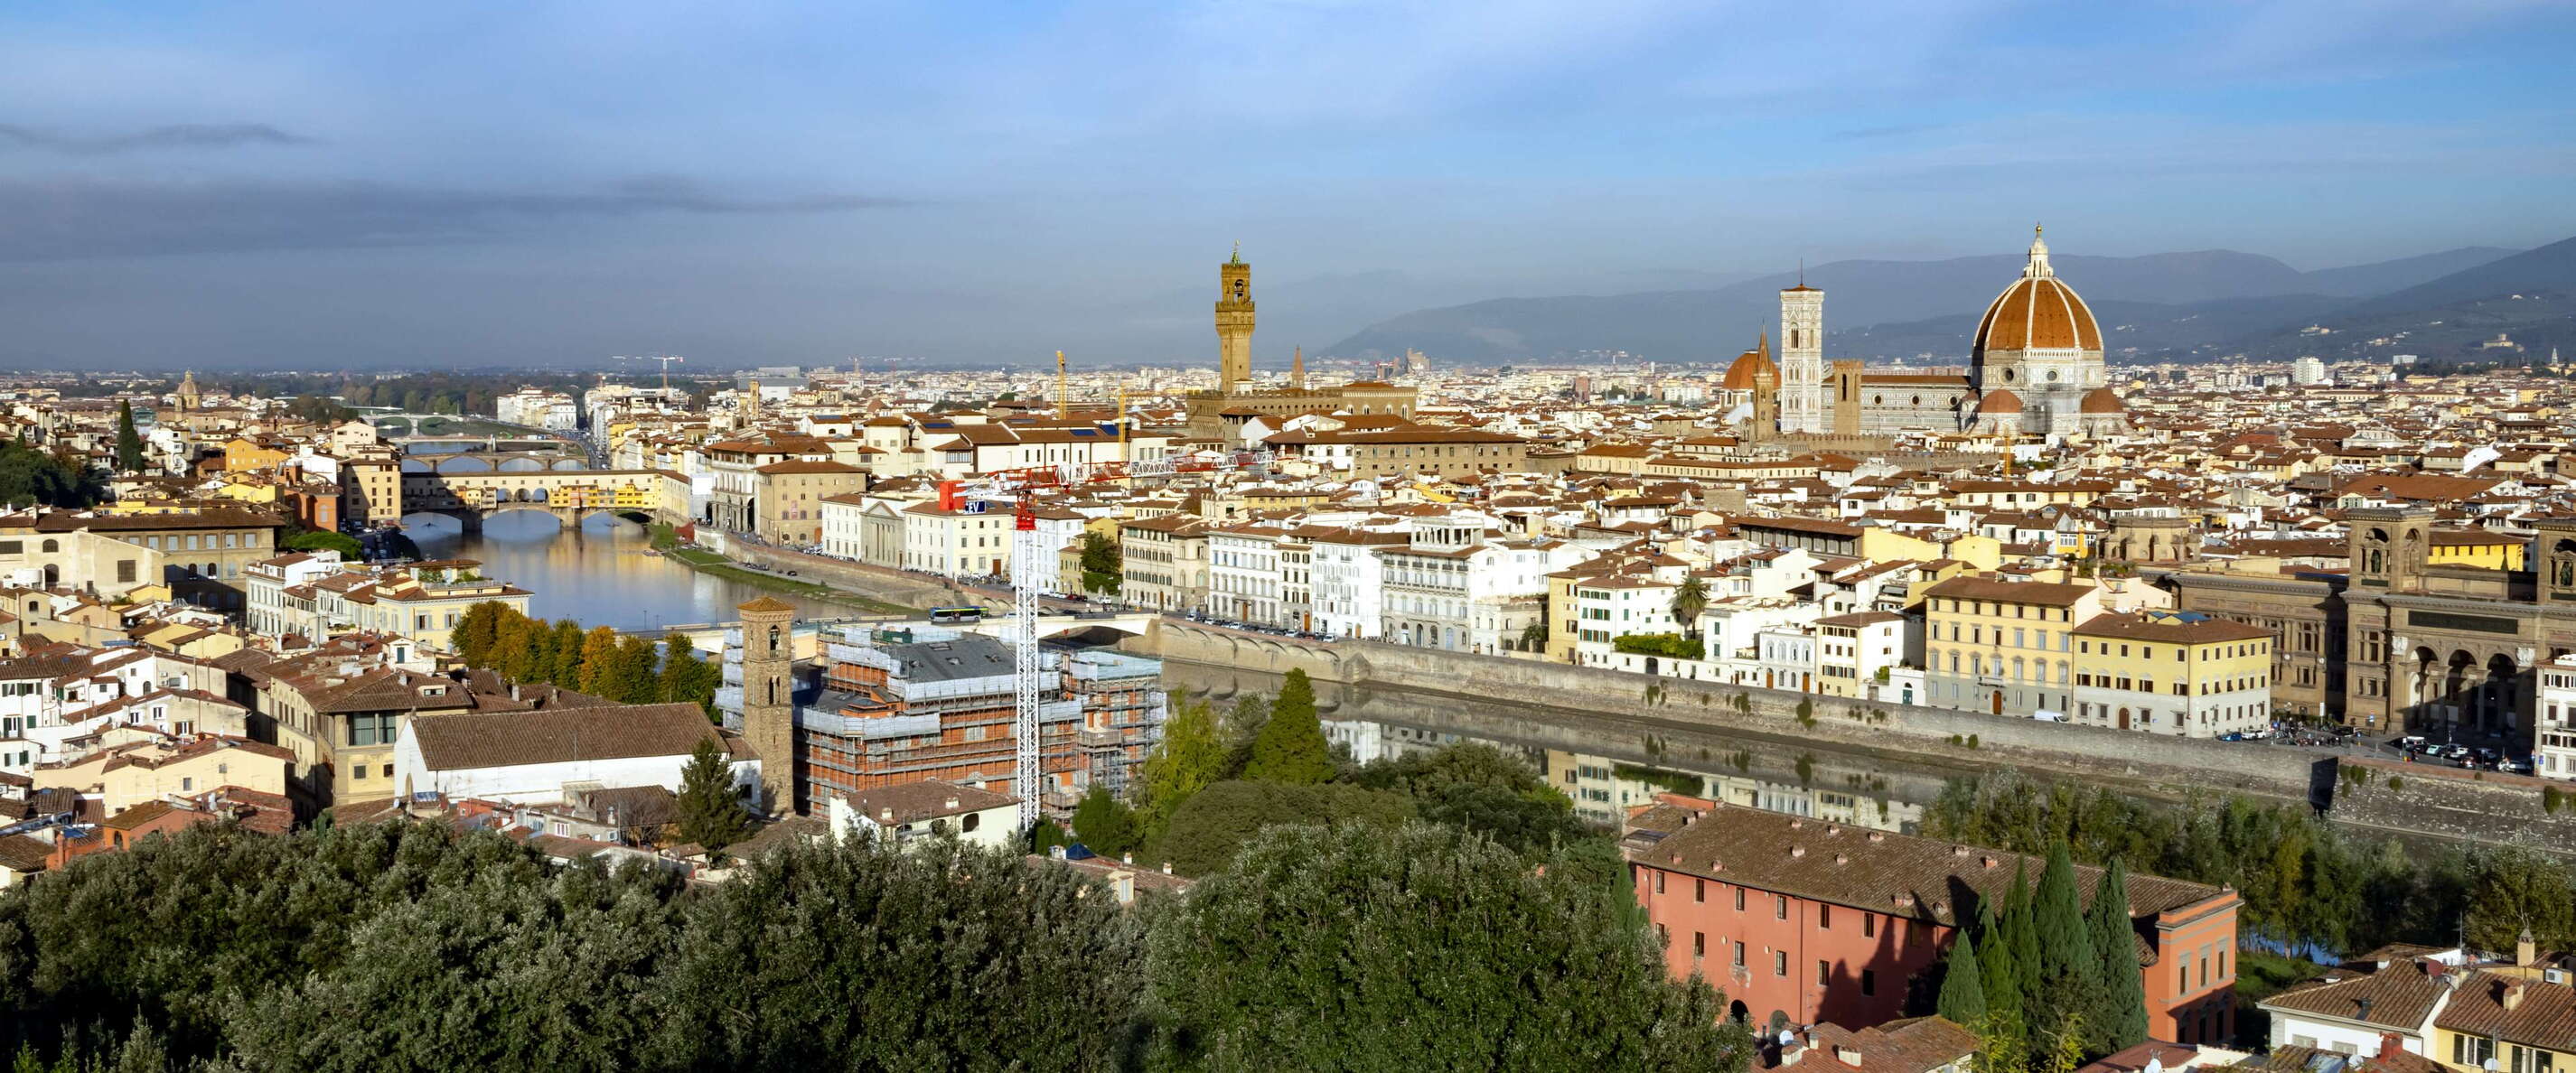 Firenze | Historic centre and Fiume Arno